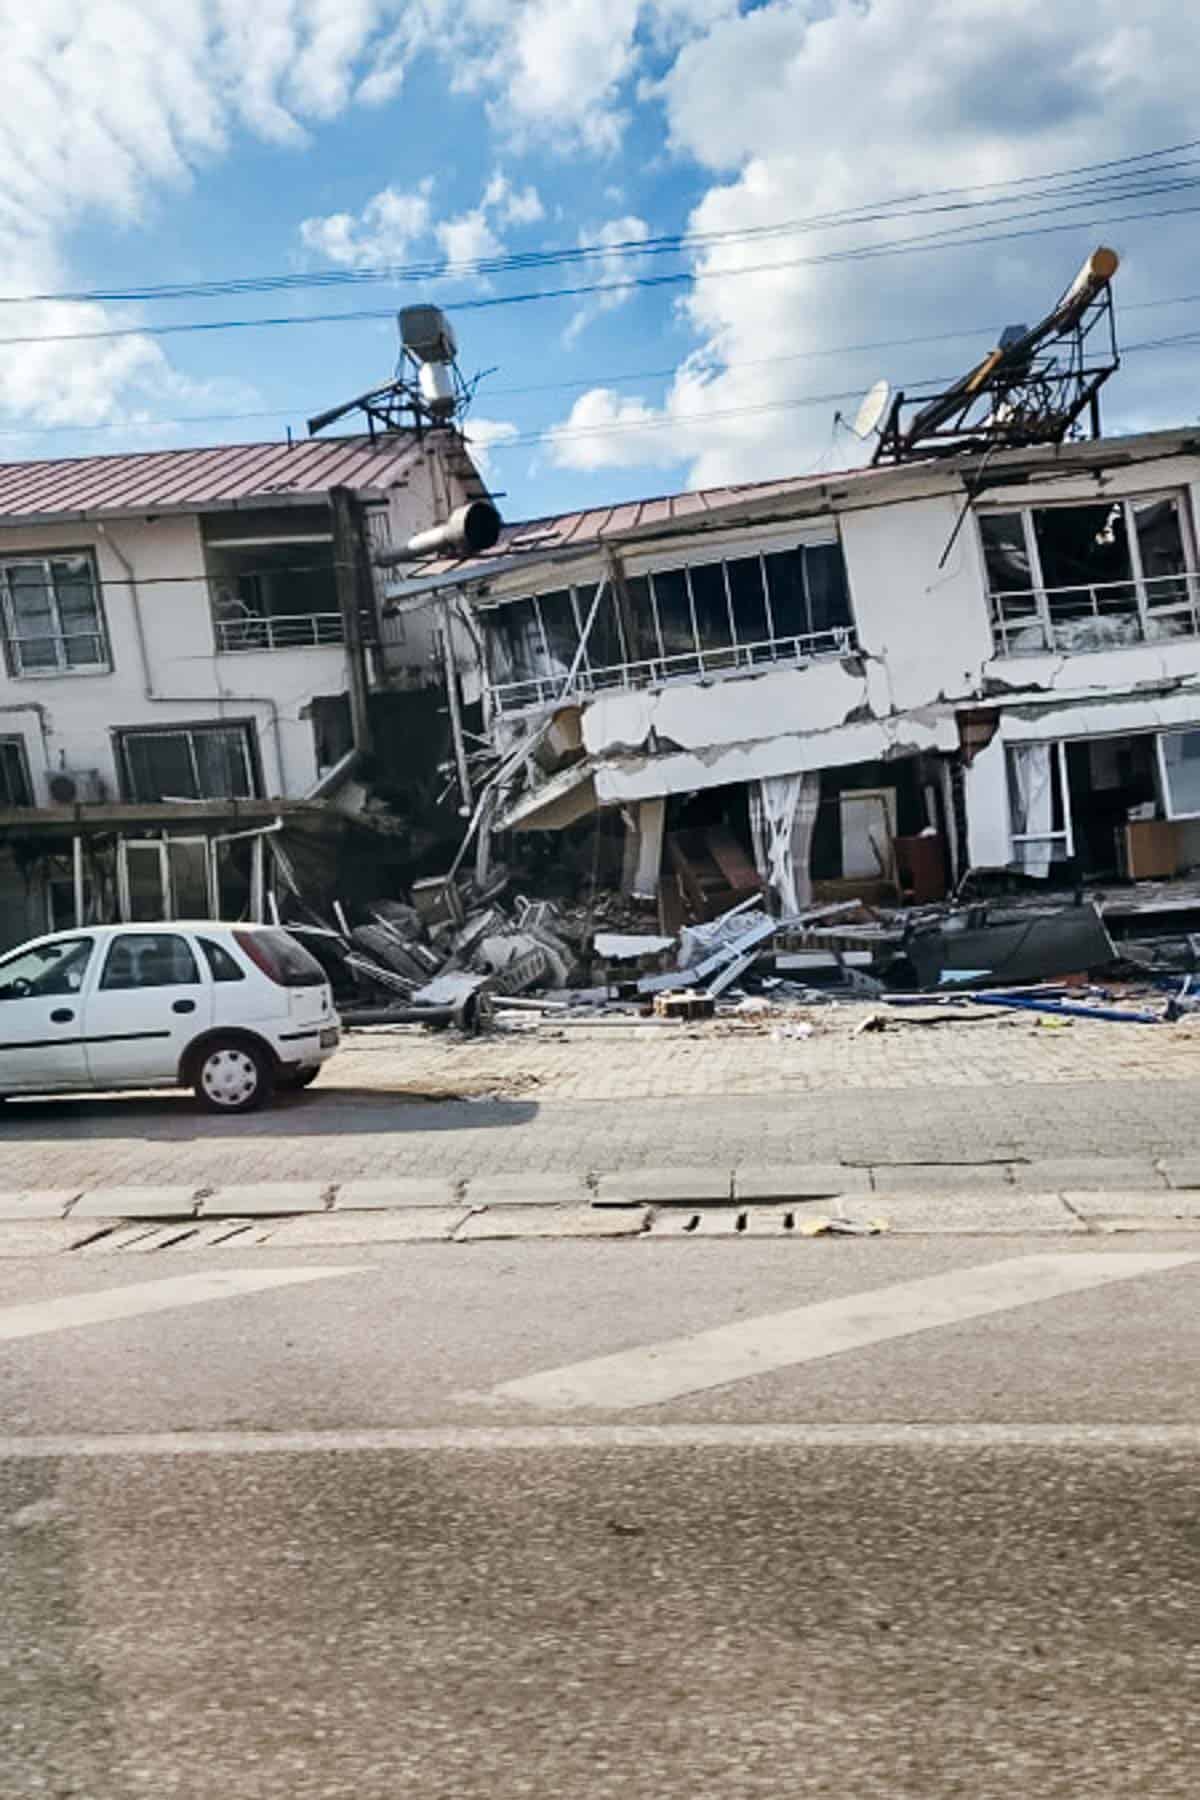 A house after an earthquake hit.